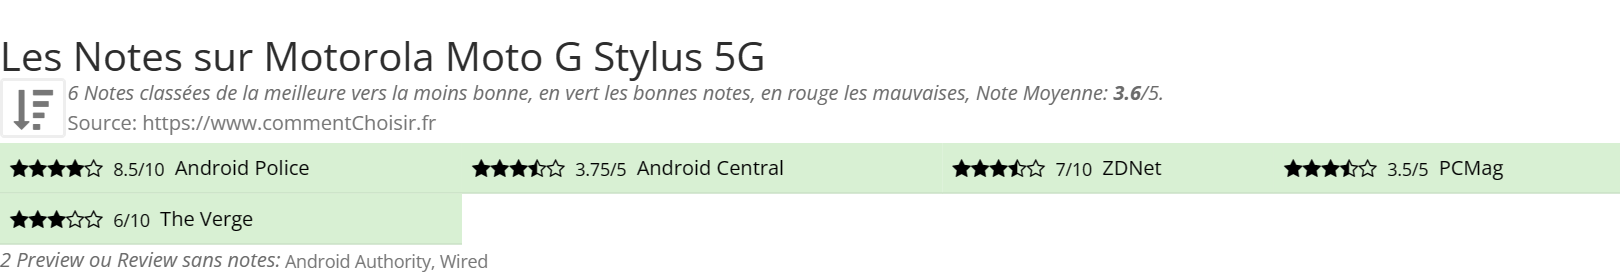 Ratings Motorola Moto G Stylus 5G